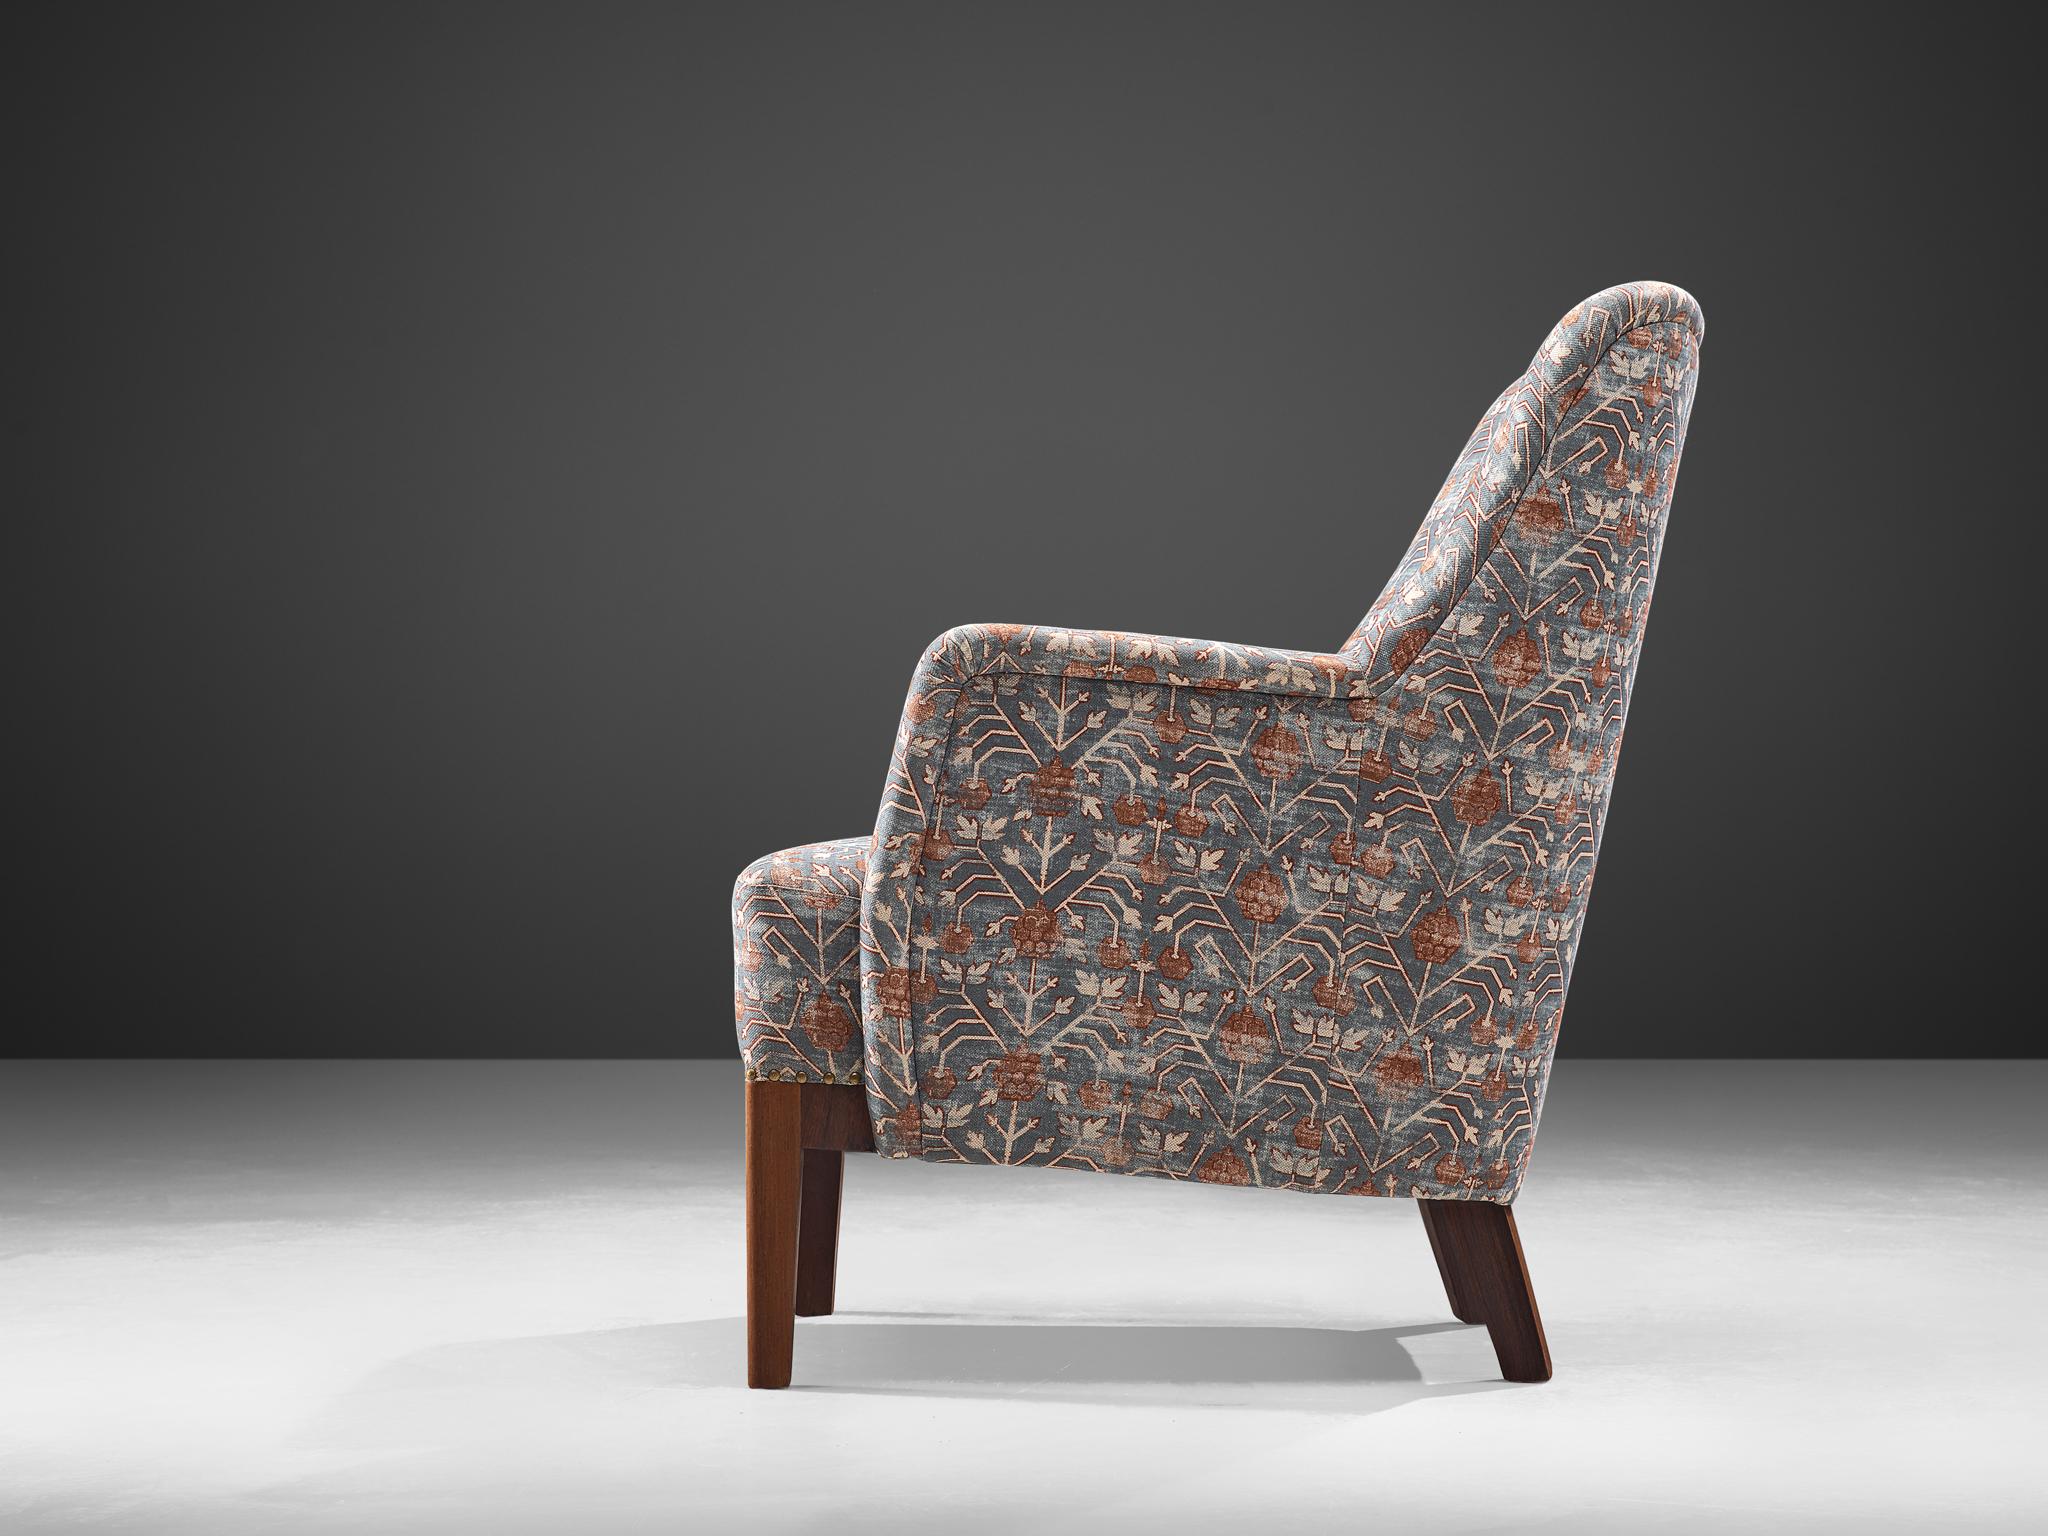 Scandinavian Modern Danish Lounge Chair with ZAK+FOX 'Fantasma' Collection 2020 Upholstery